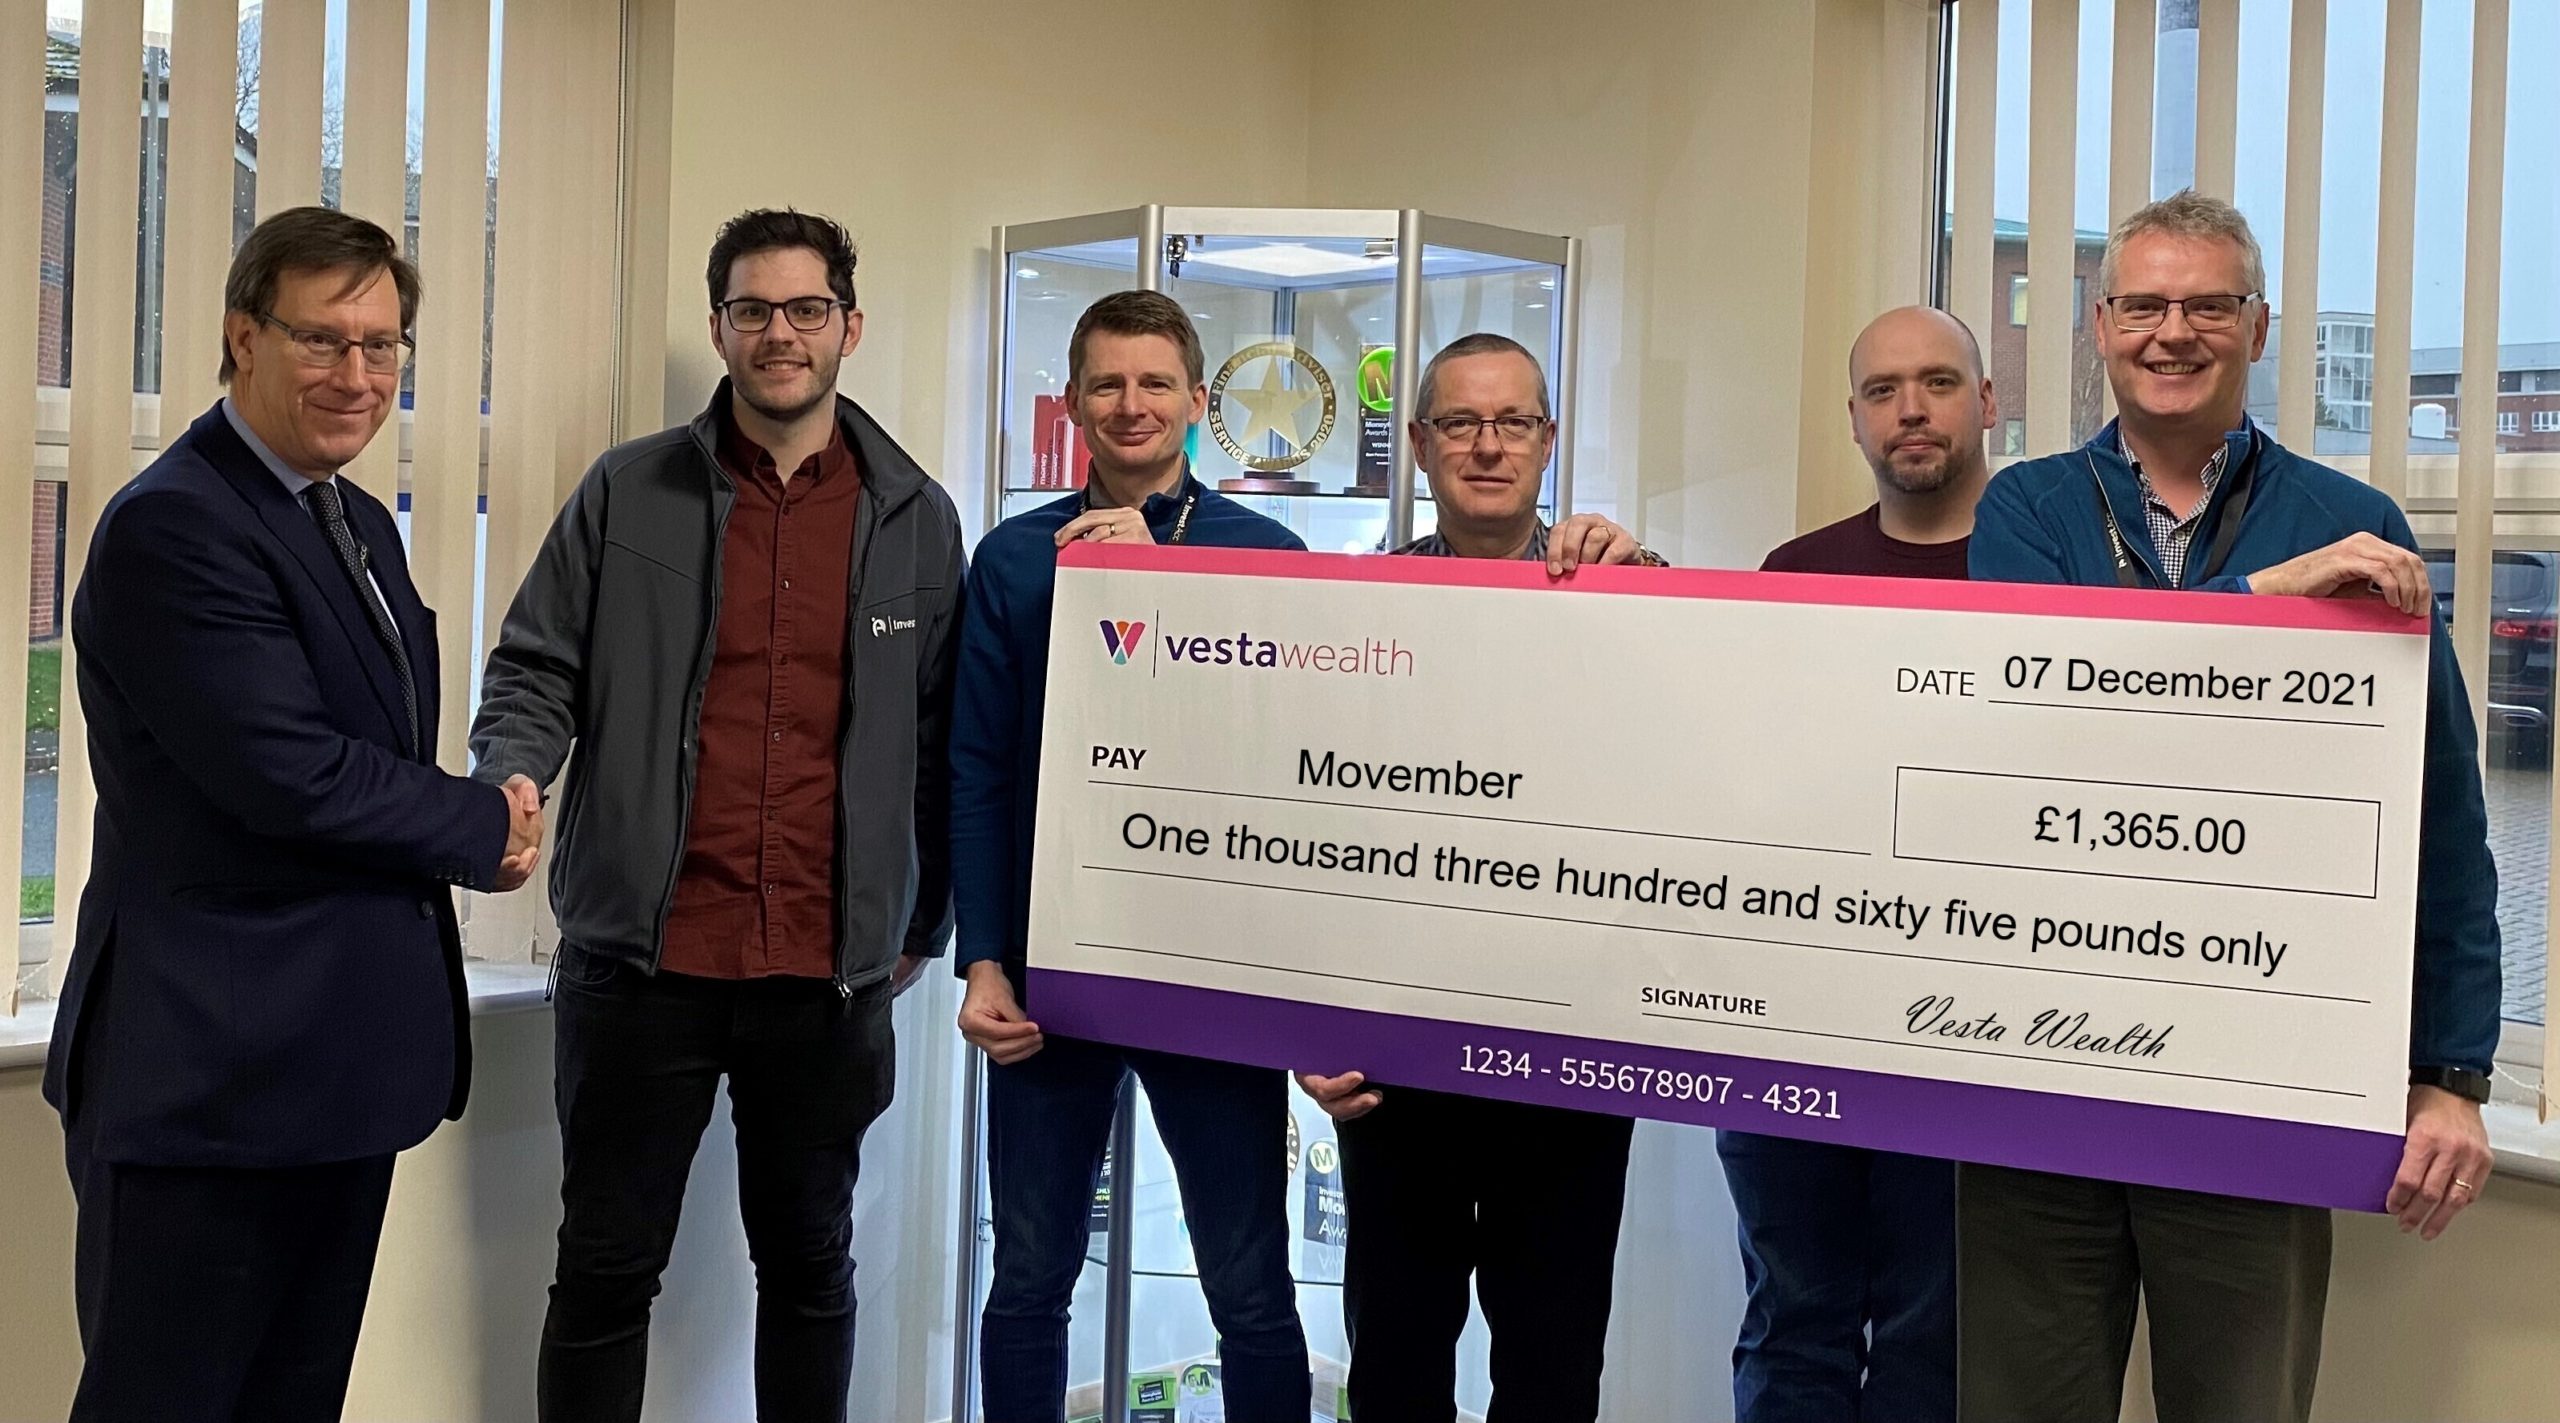 Vesta colleagues raise £1,365 for Movember